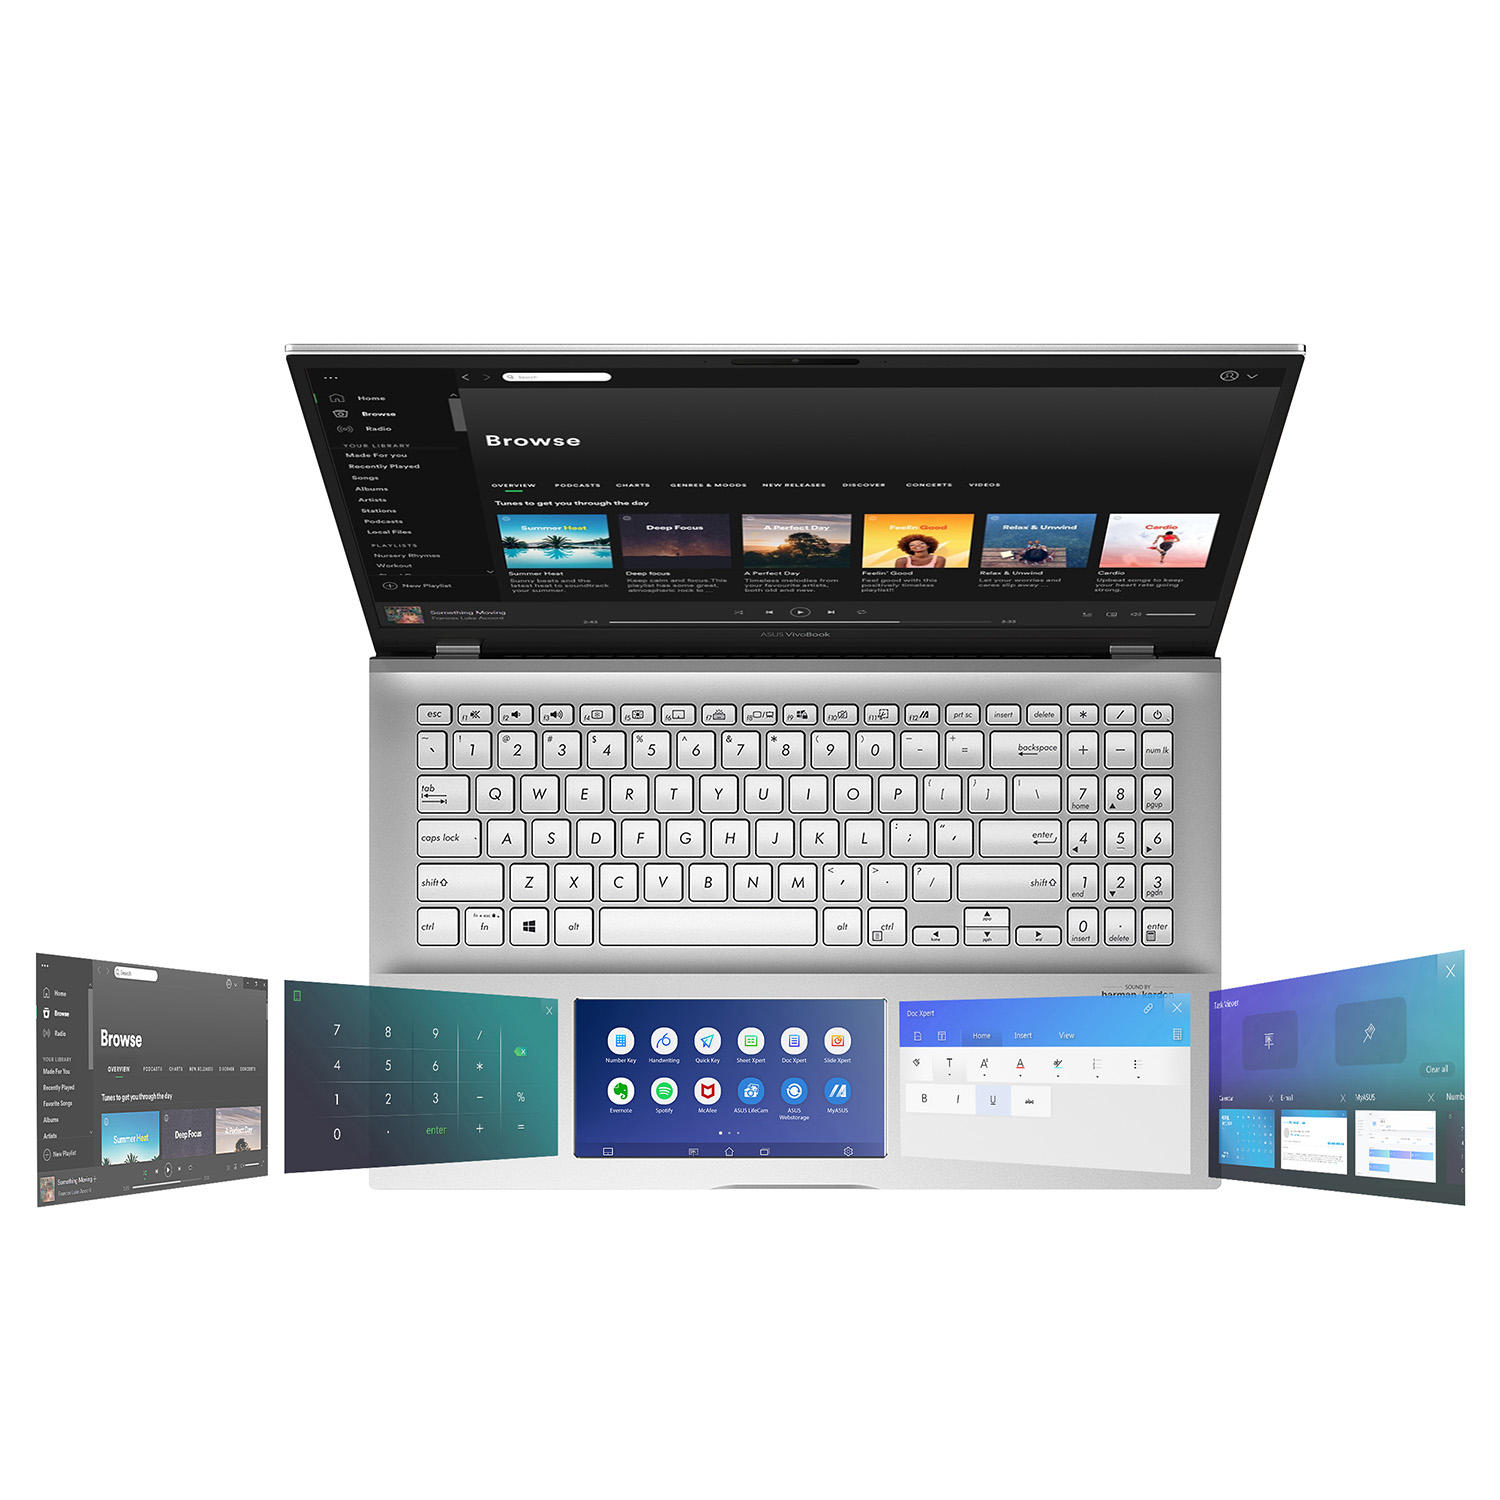 ASUS Vivobook (S532FA-SB77) 15.6″ Laptop, 8th Gen Core i7, 8GB RAM, 512 SSD, ScreenPad 2.0, 2 Year ADP + 1 Year Warranty